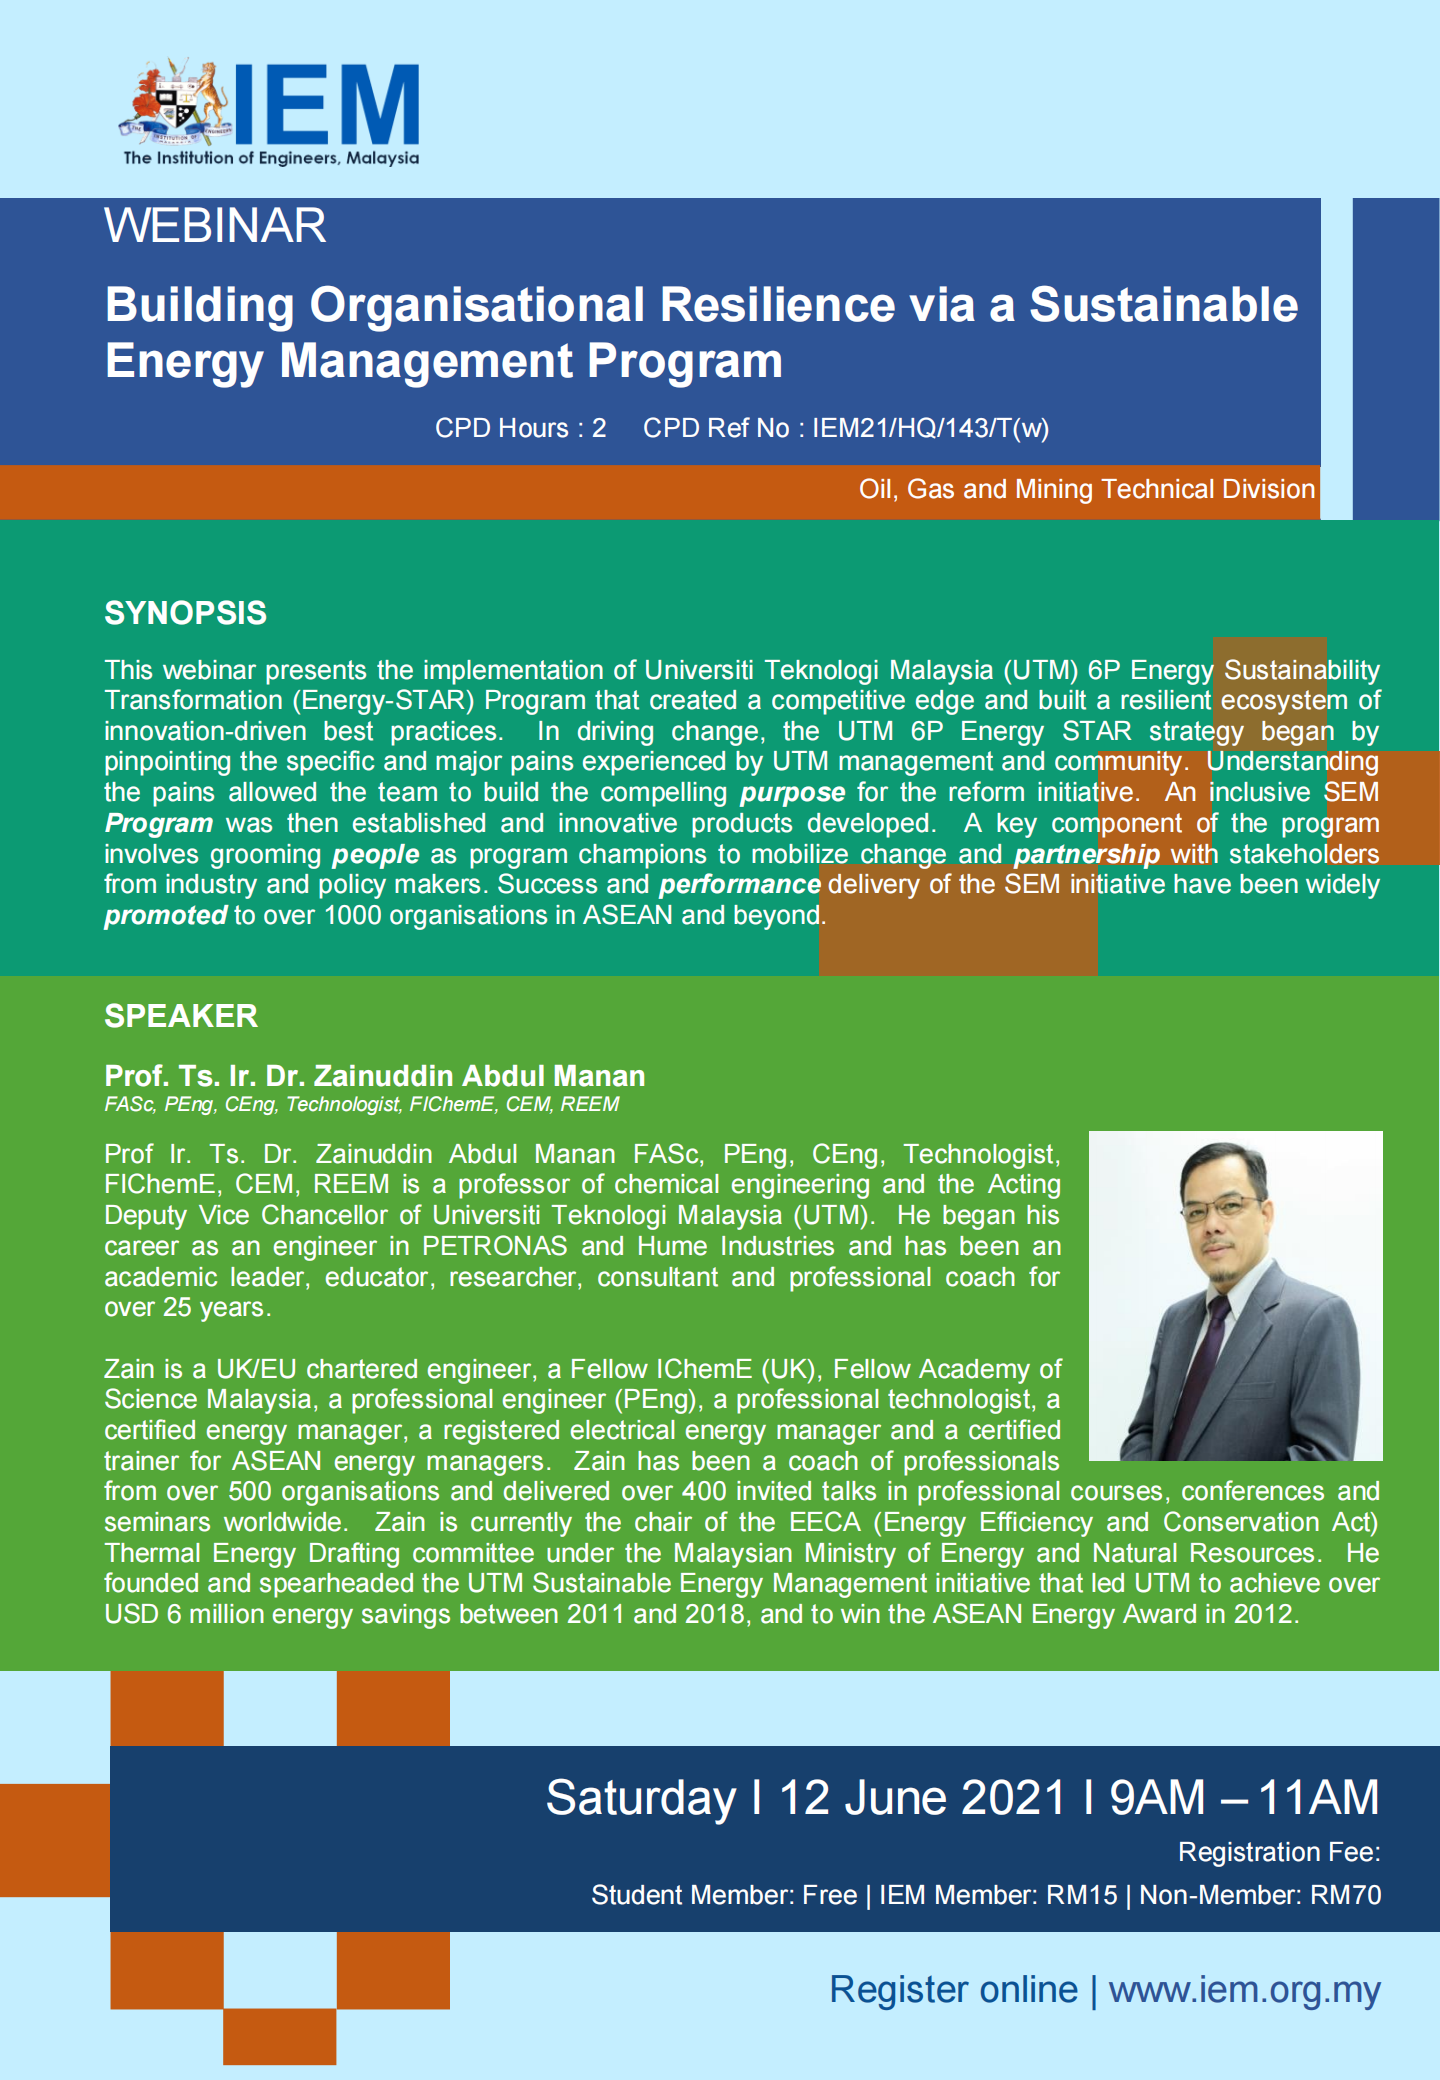 IEM WEBINAR (12 Jun 2021) - Building Organizational Resilience via a Sustainable Energy Management Program 21